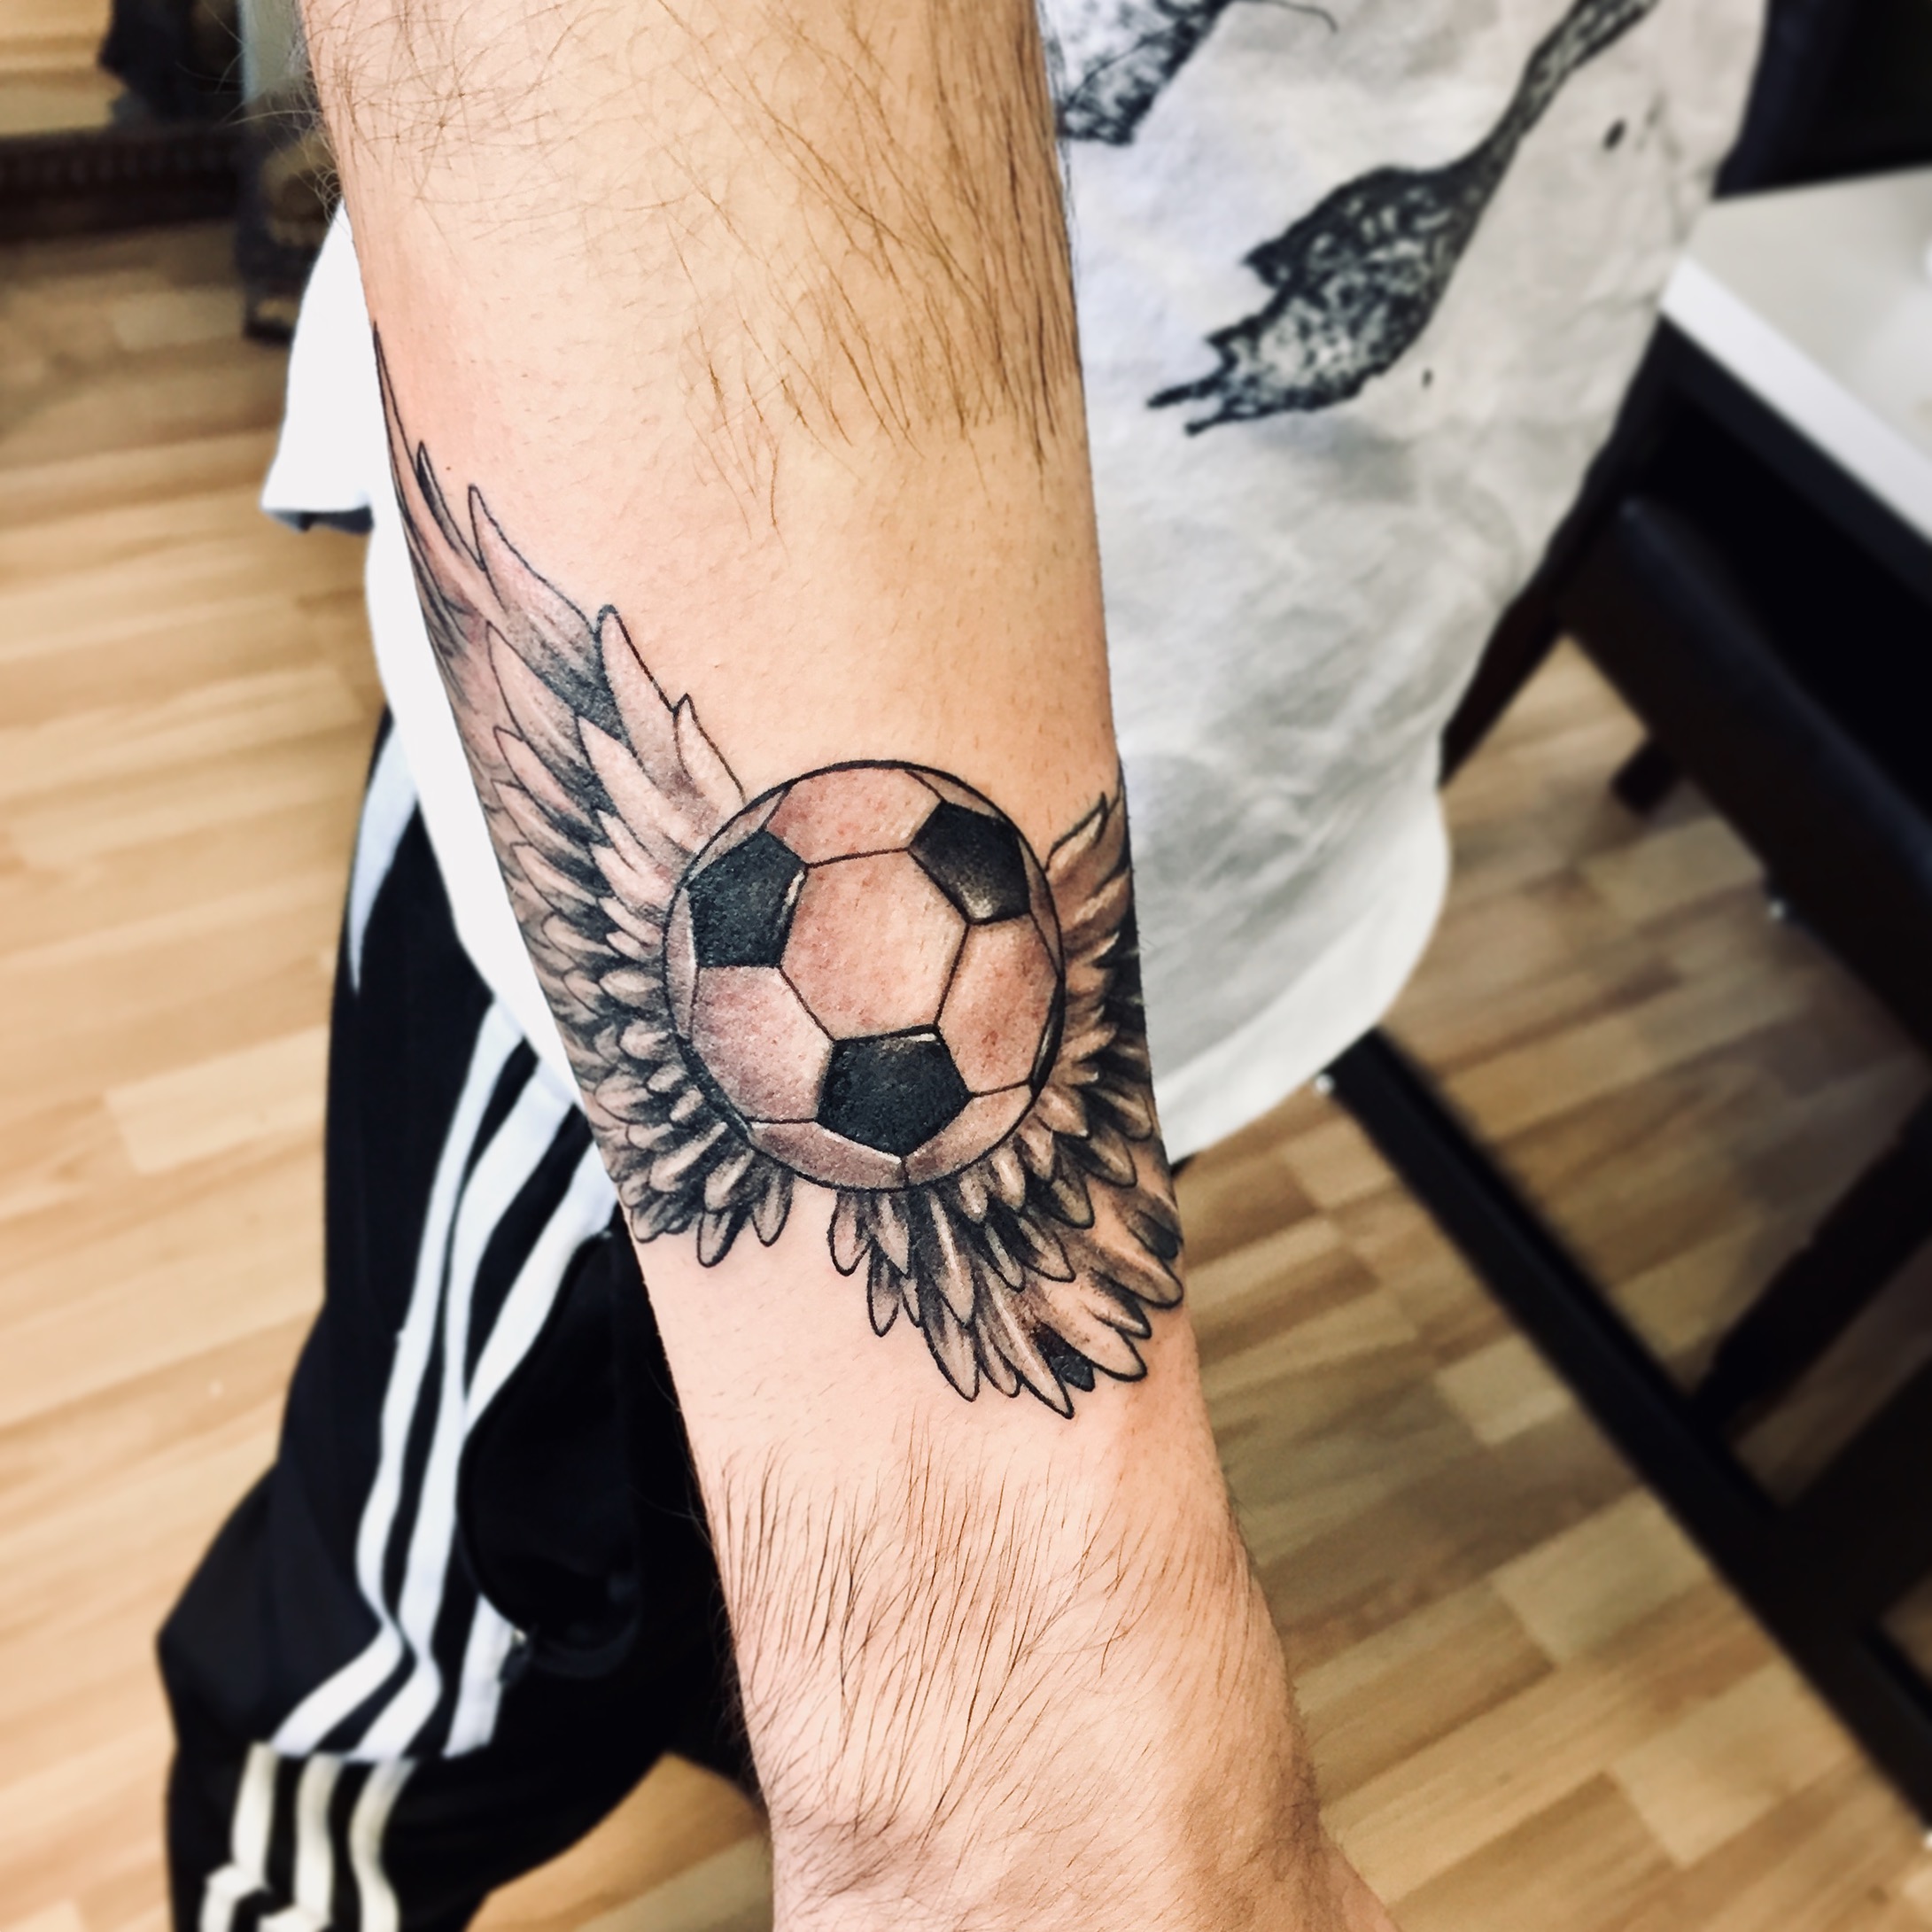 Details more than 73 soccer tattoos on calf super hot - thtantai2